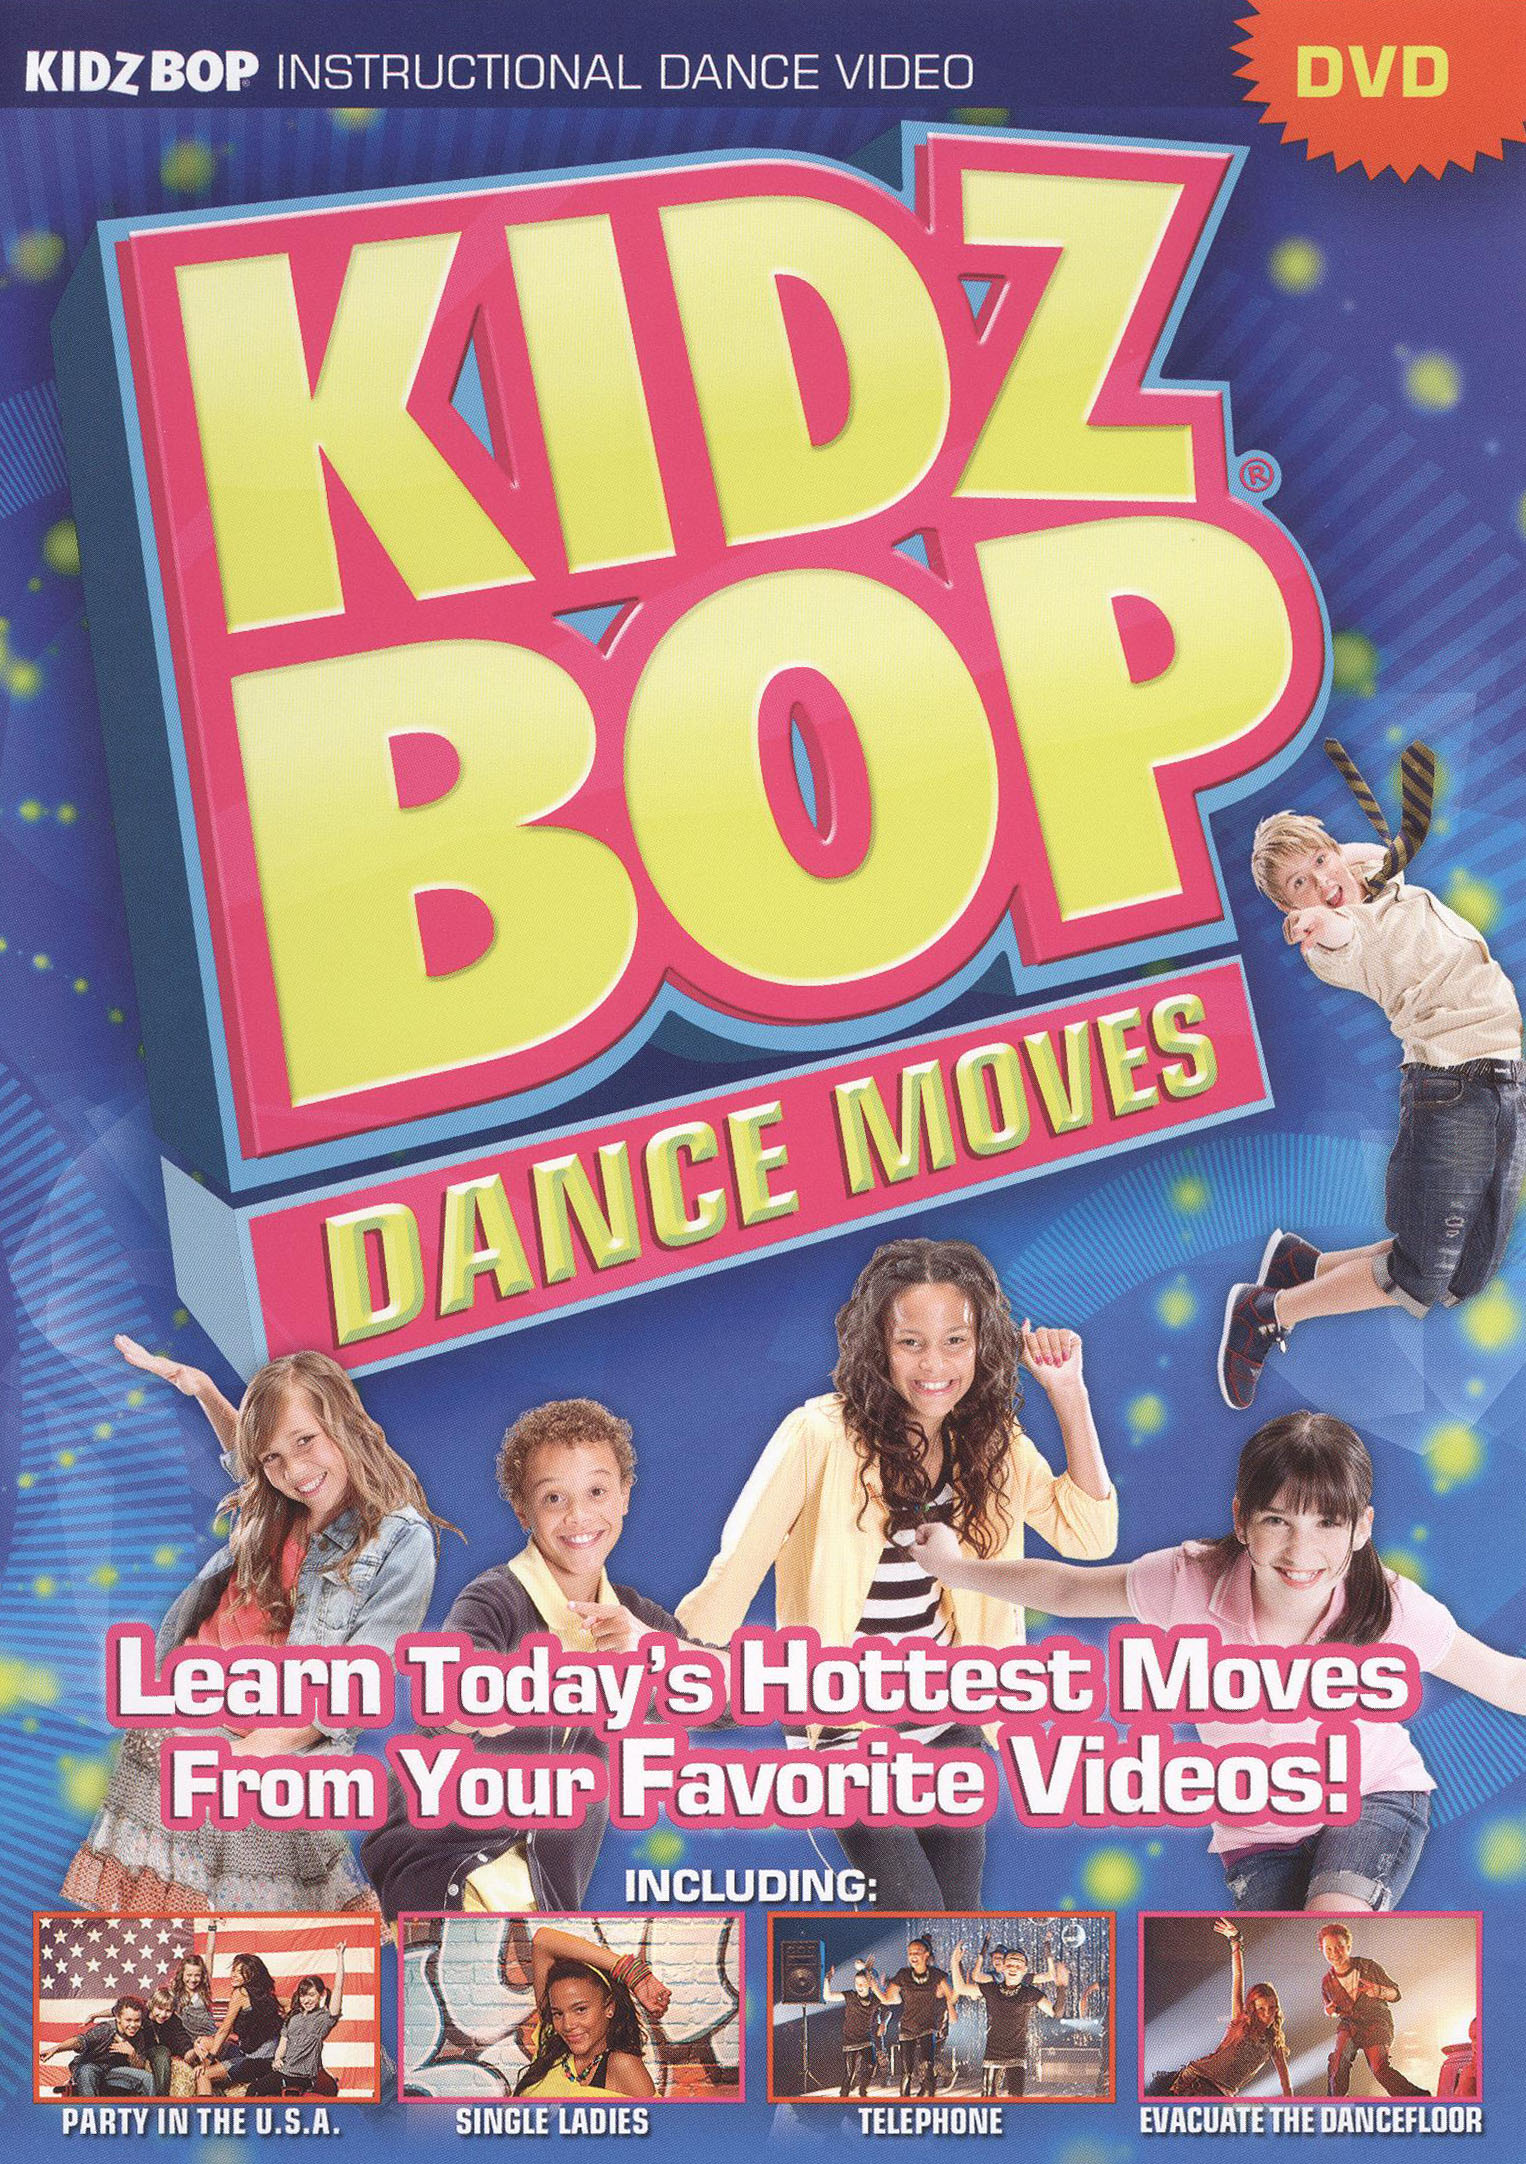 Kidz Bop Dance Moves | Kidz Bop Wiki | Fandom